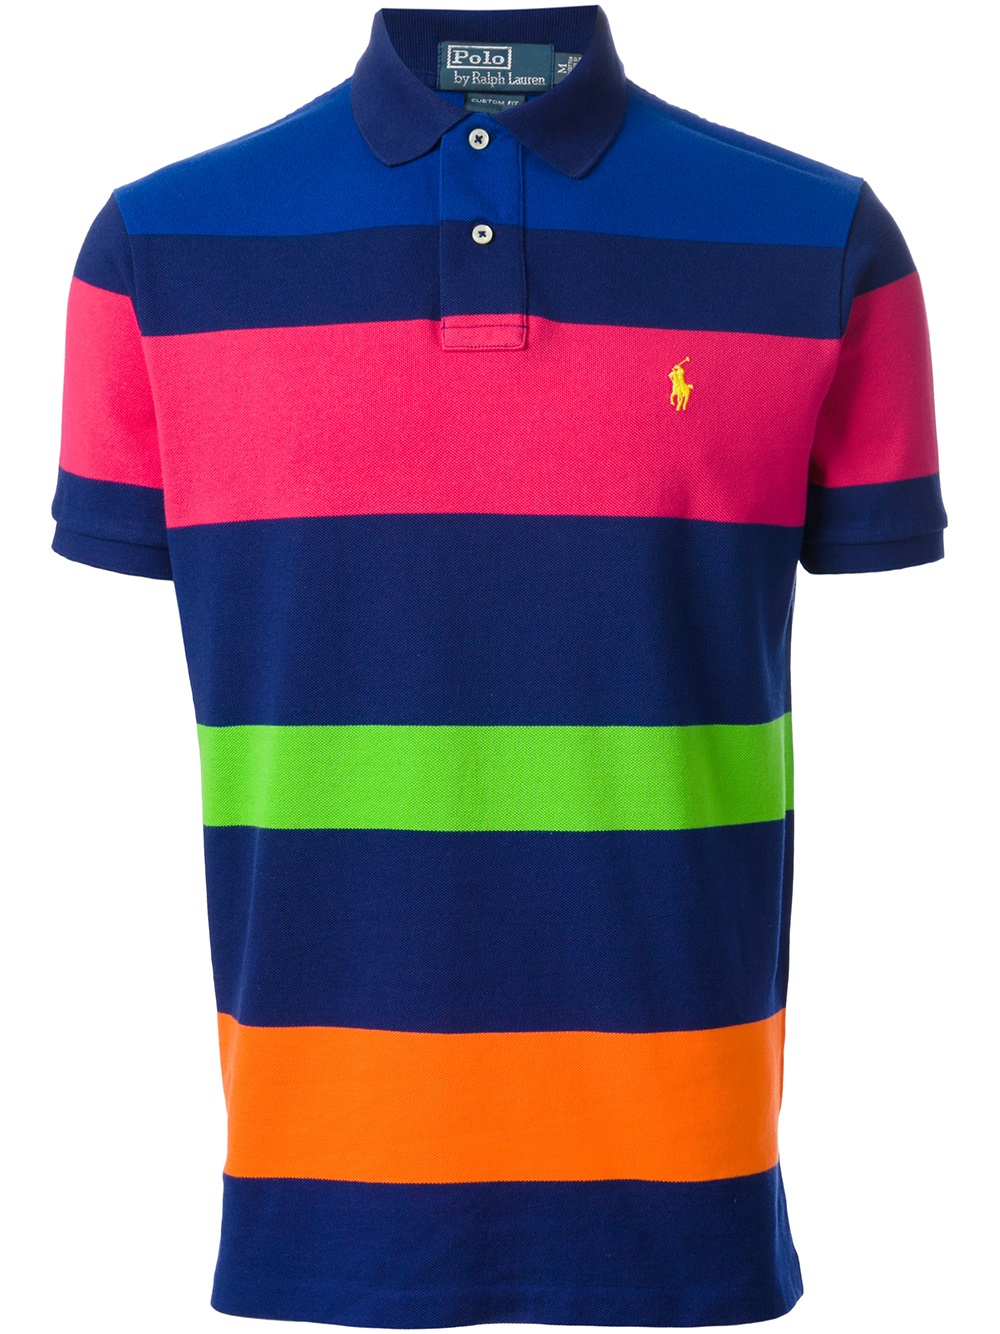 Polo Ralph Lauren Block Stripe Polo Shirt in Blue for Men - Lyst